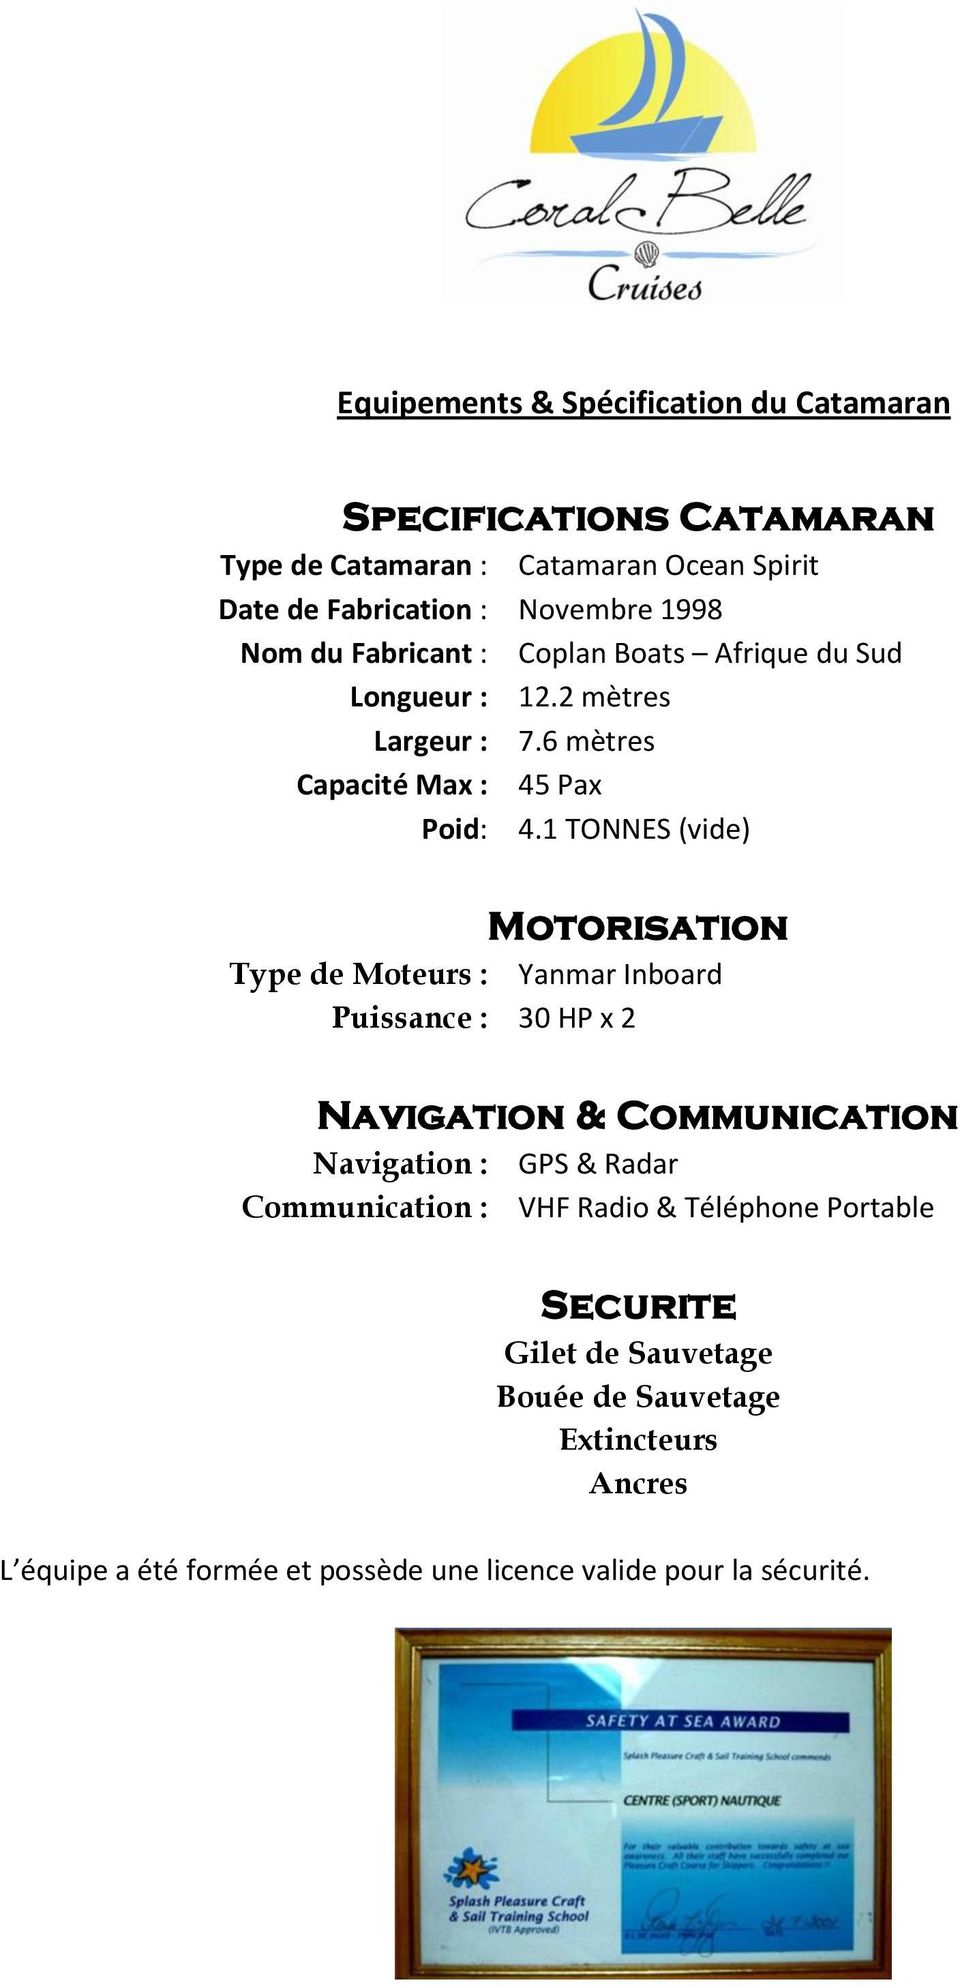 1 TONNES (vide) Motorisation Type de Moteurs : Yanmar Inboard Puissance : 30 HP x 2 Navigation & Communication Navigation : GPS & Radar